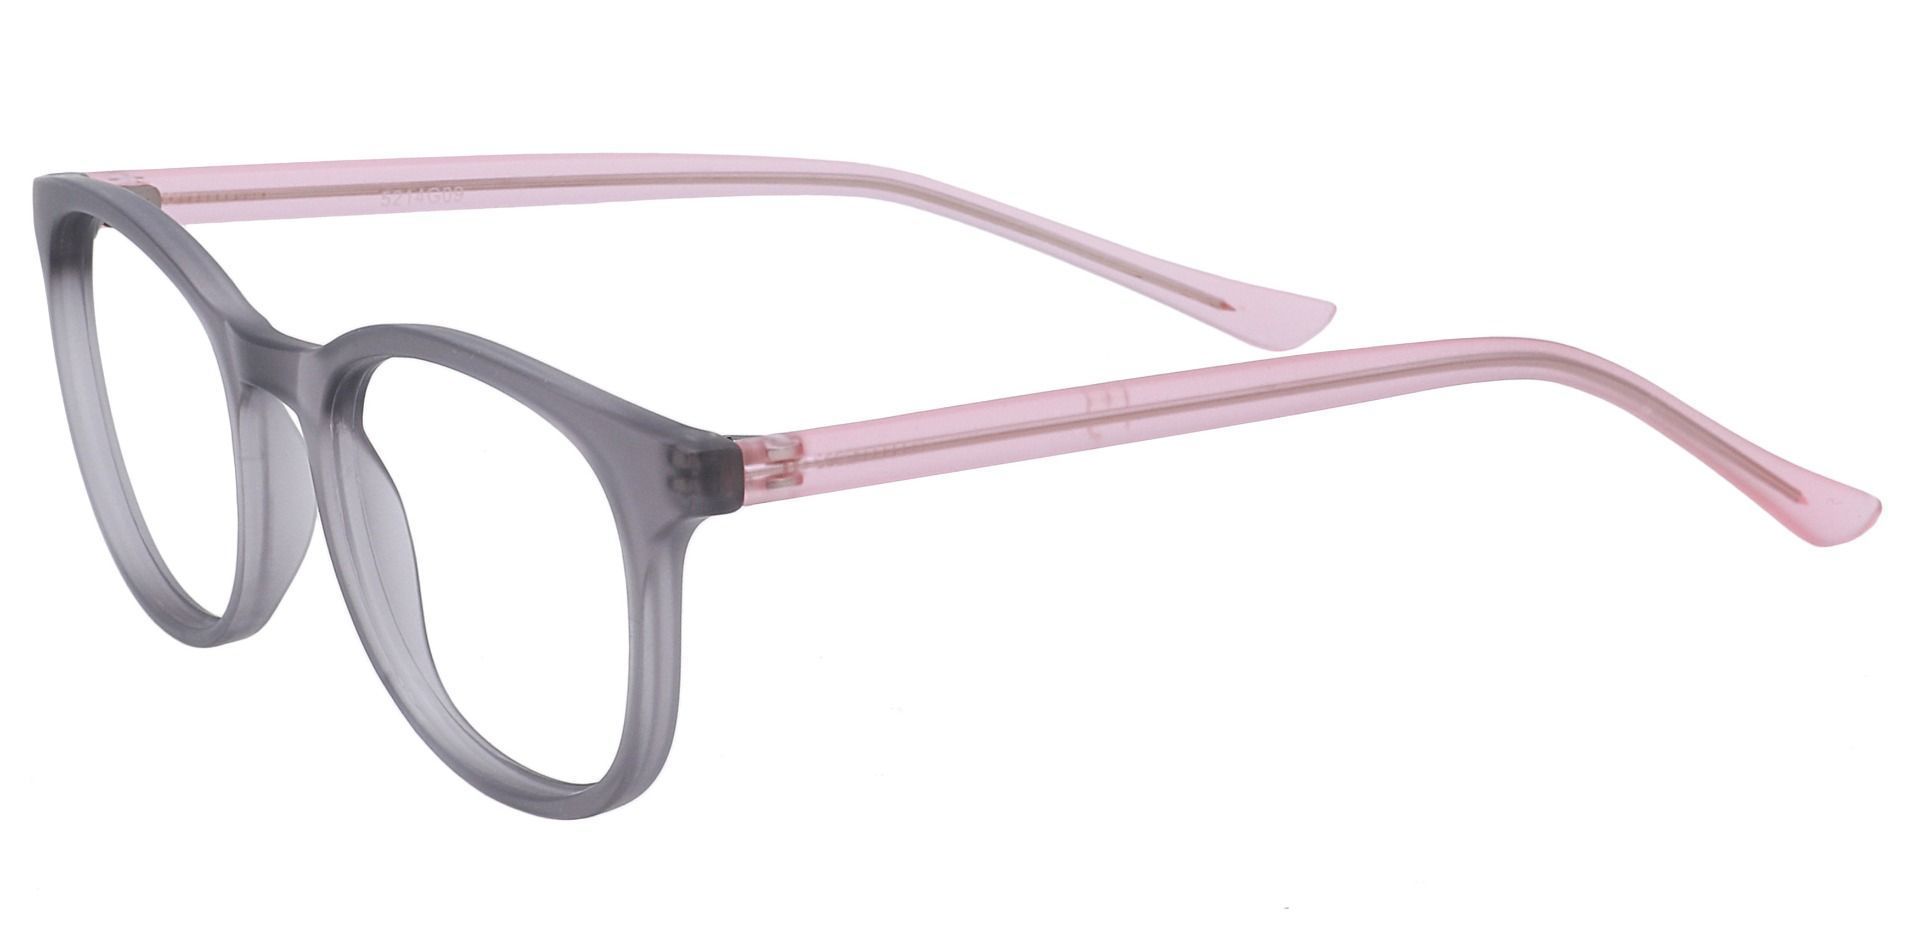 Gretchen Oval Reading Glasses - Matte Grey Crystal